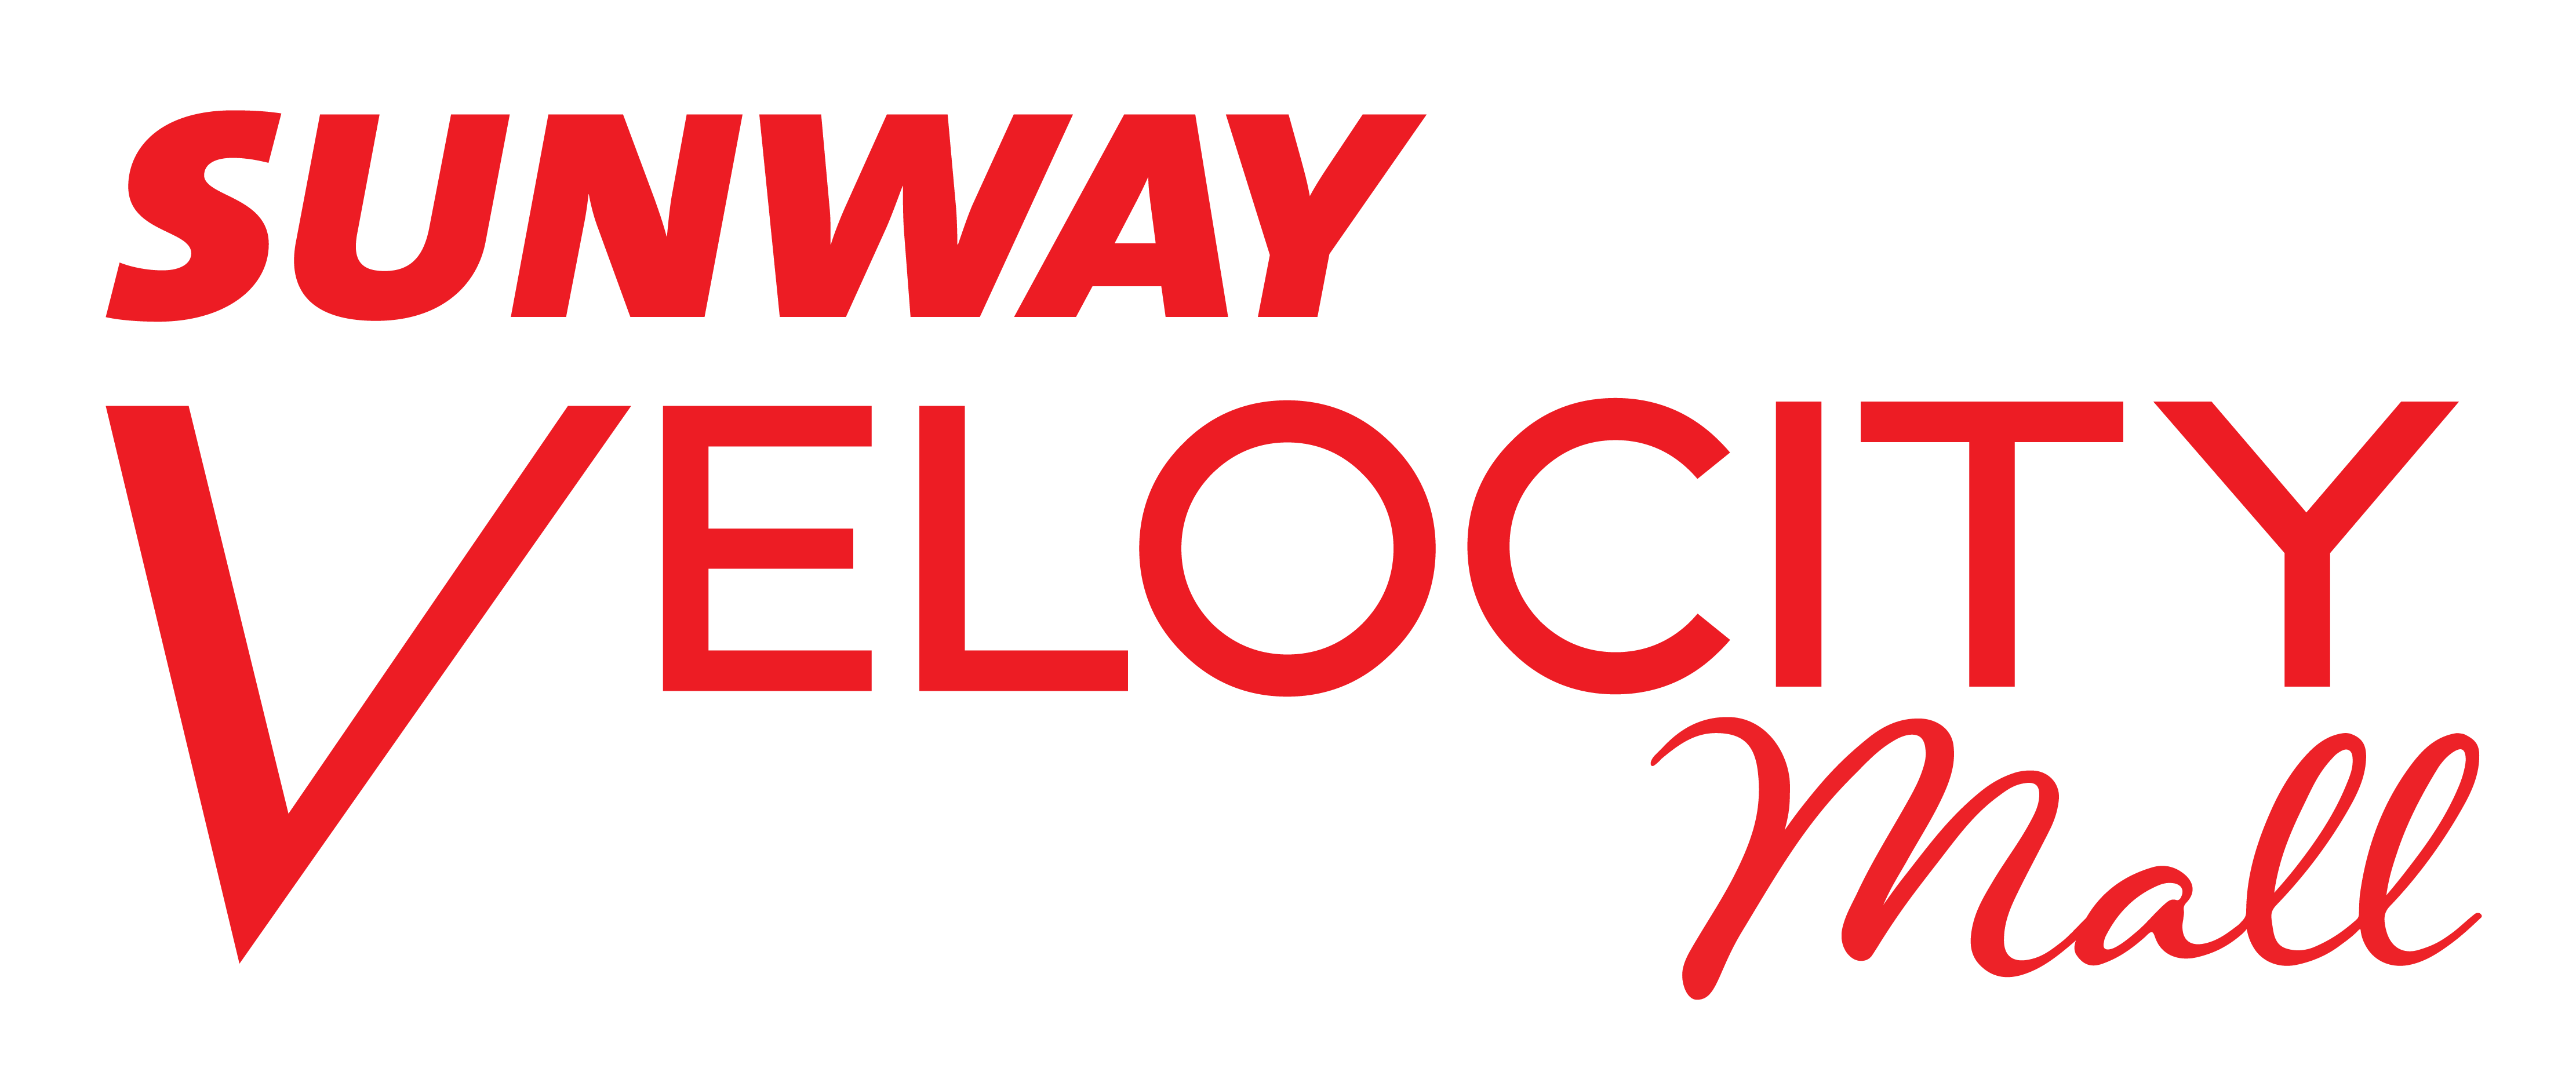 Санвэй логотип. Velocity лого. Mycom логотип. Sunway Velocity Reception. Sunway group